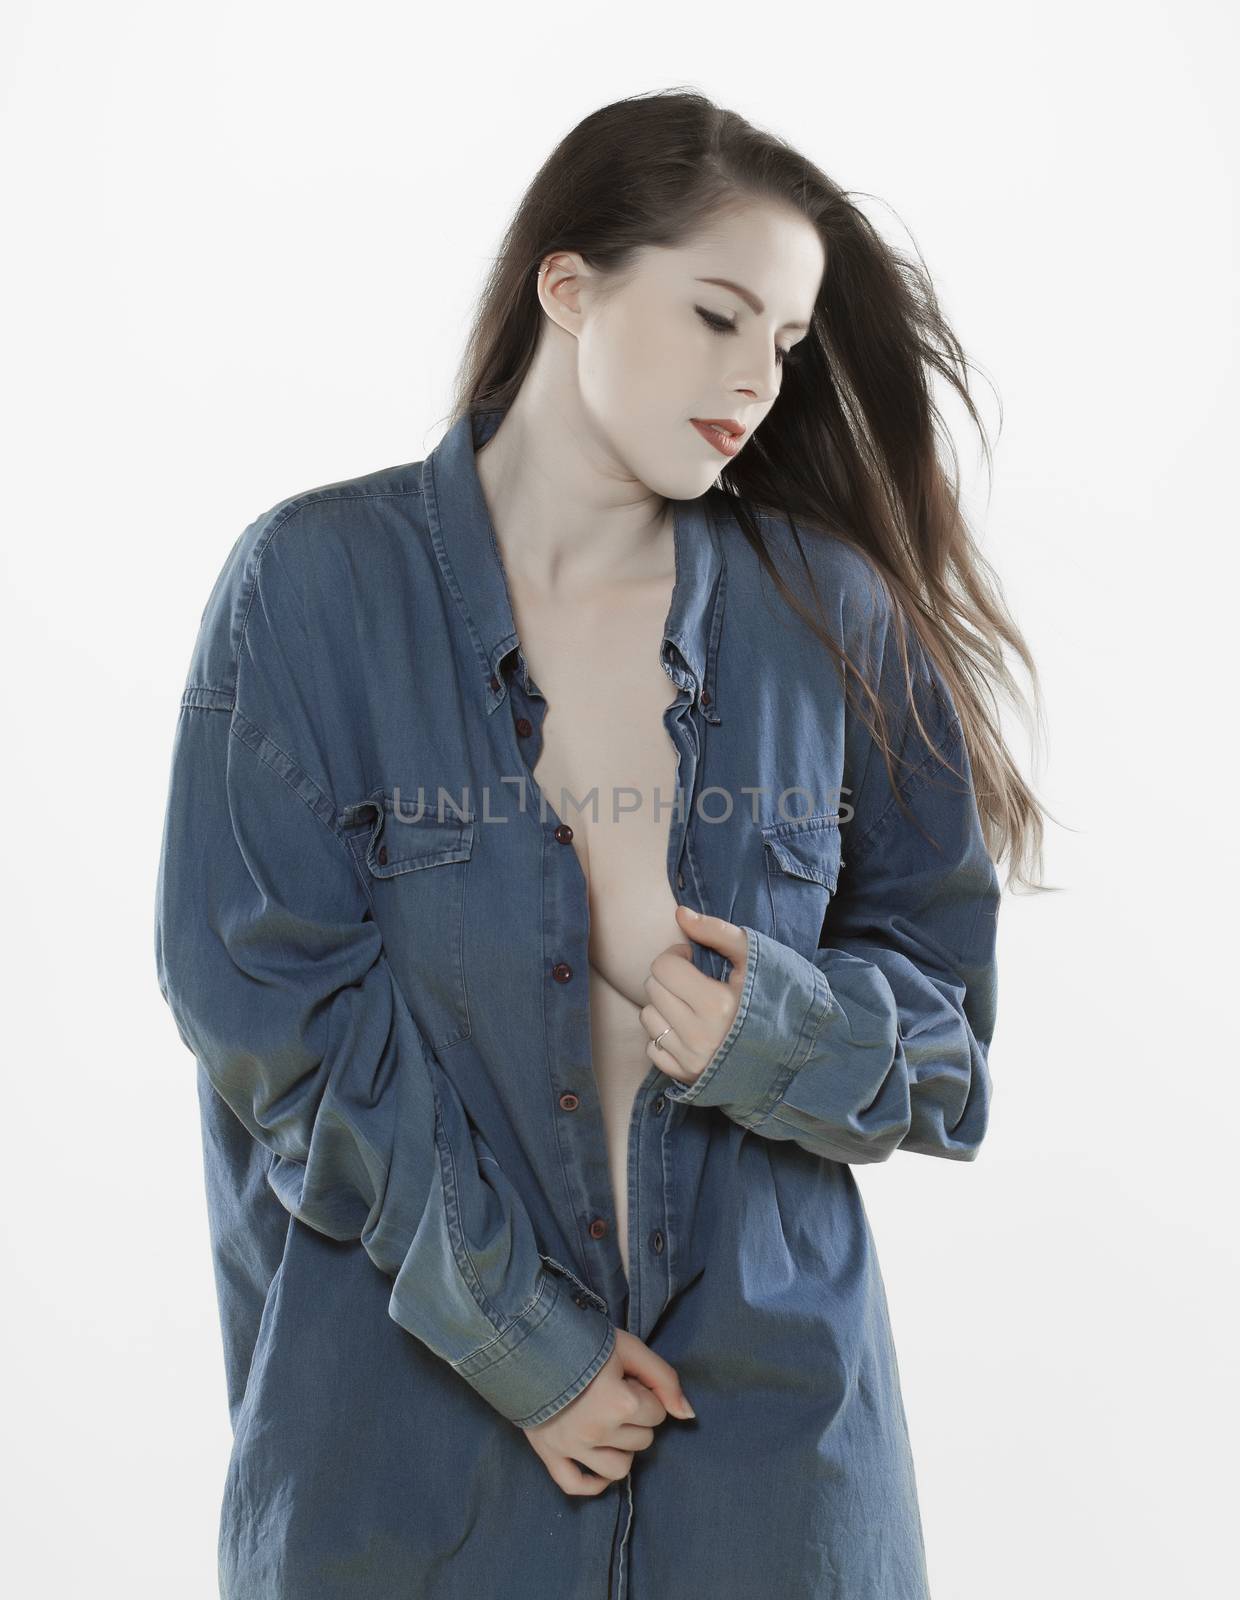 A beautiful fair skinned woman wearing a manes denim shirt over a light background.